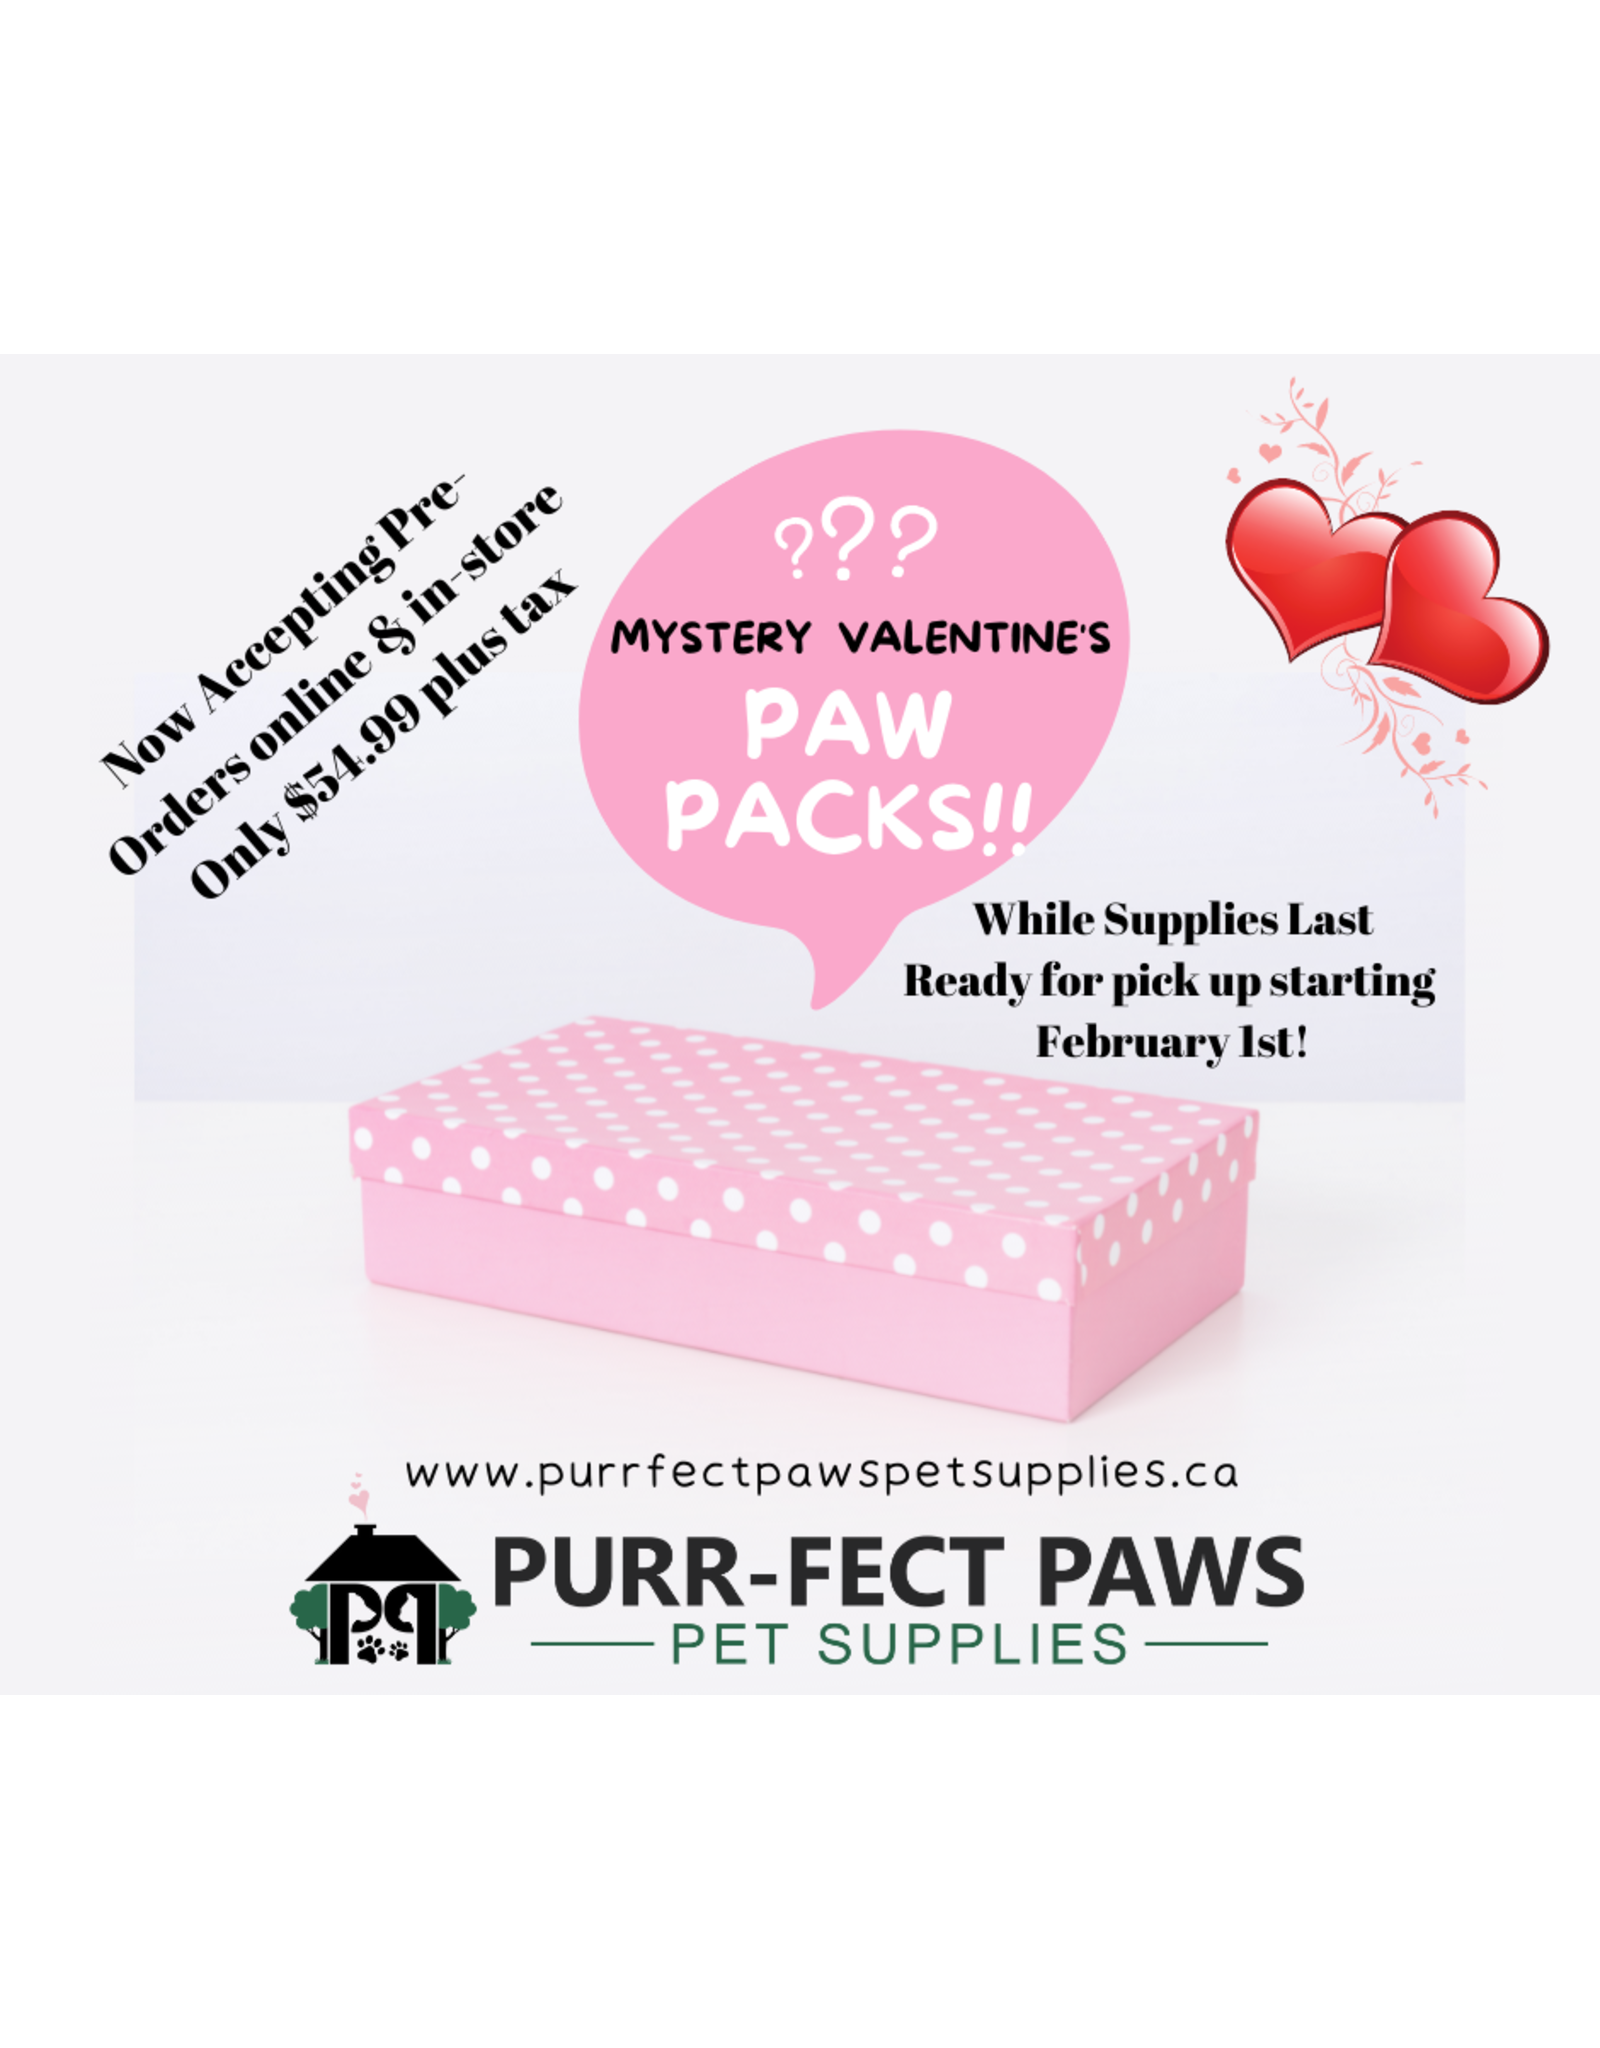 Valentine's Paw Pack